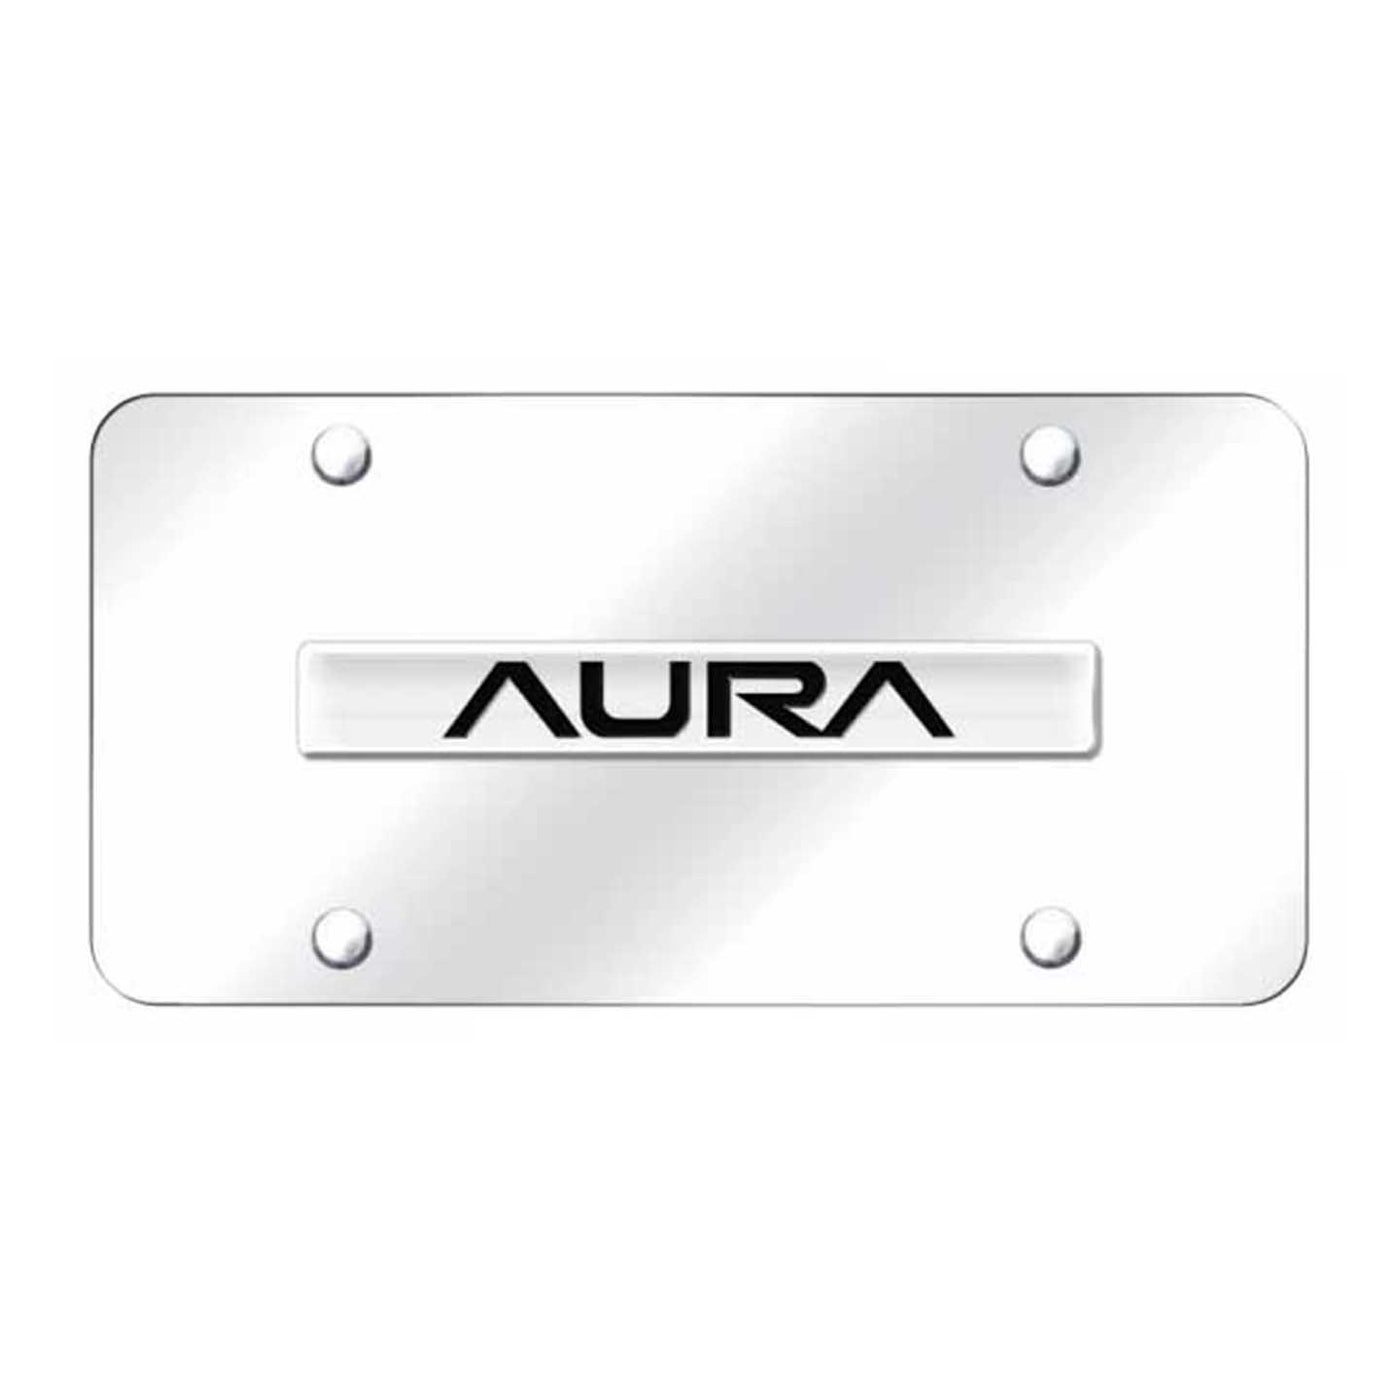 Aurora Name License Plate - Chrome on Mirrored